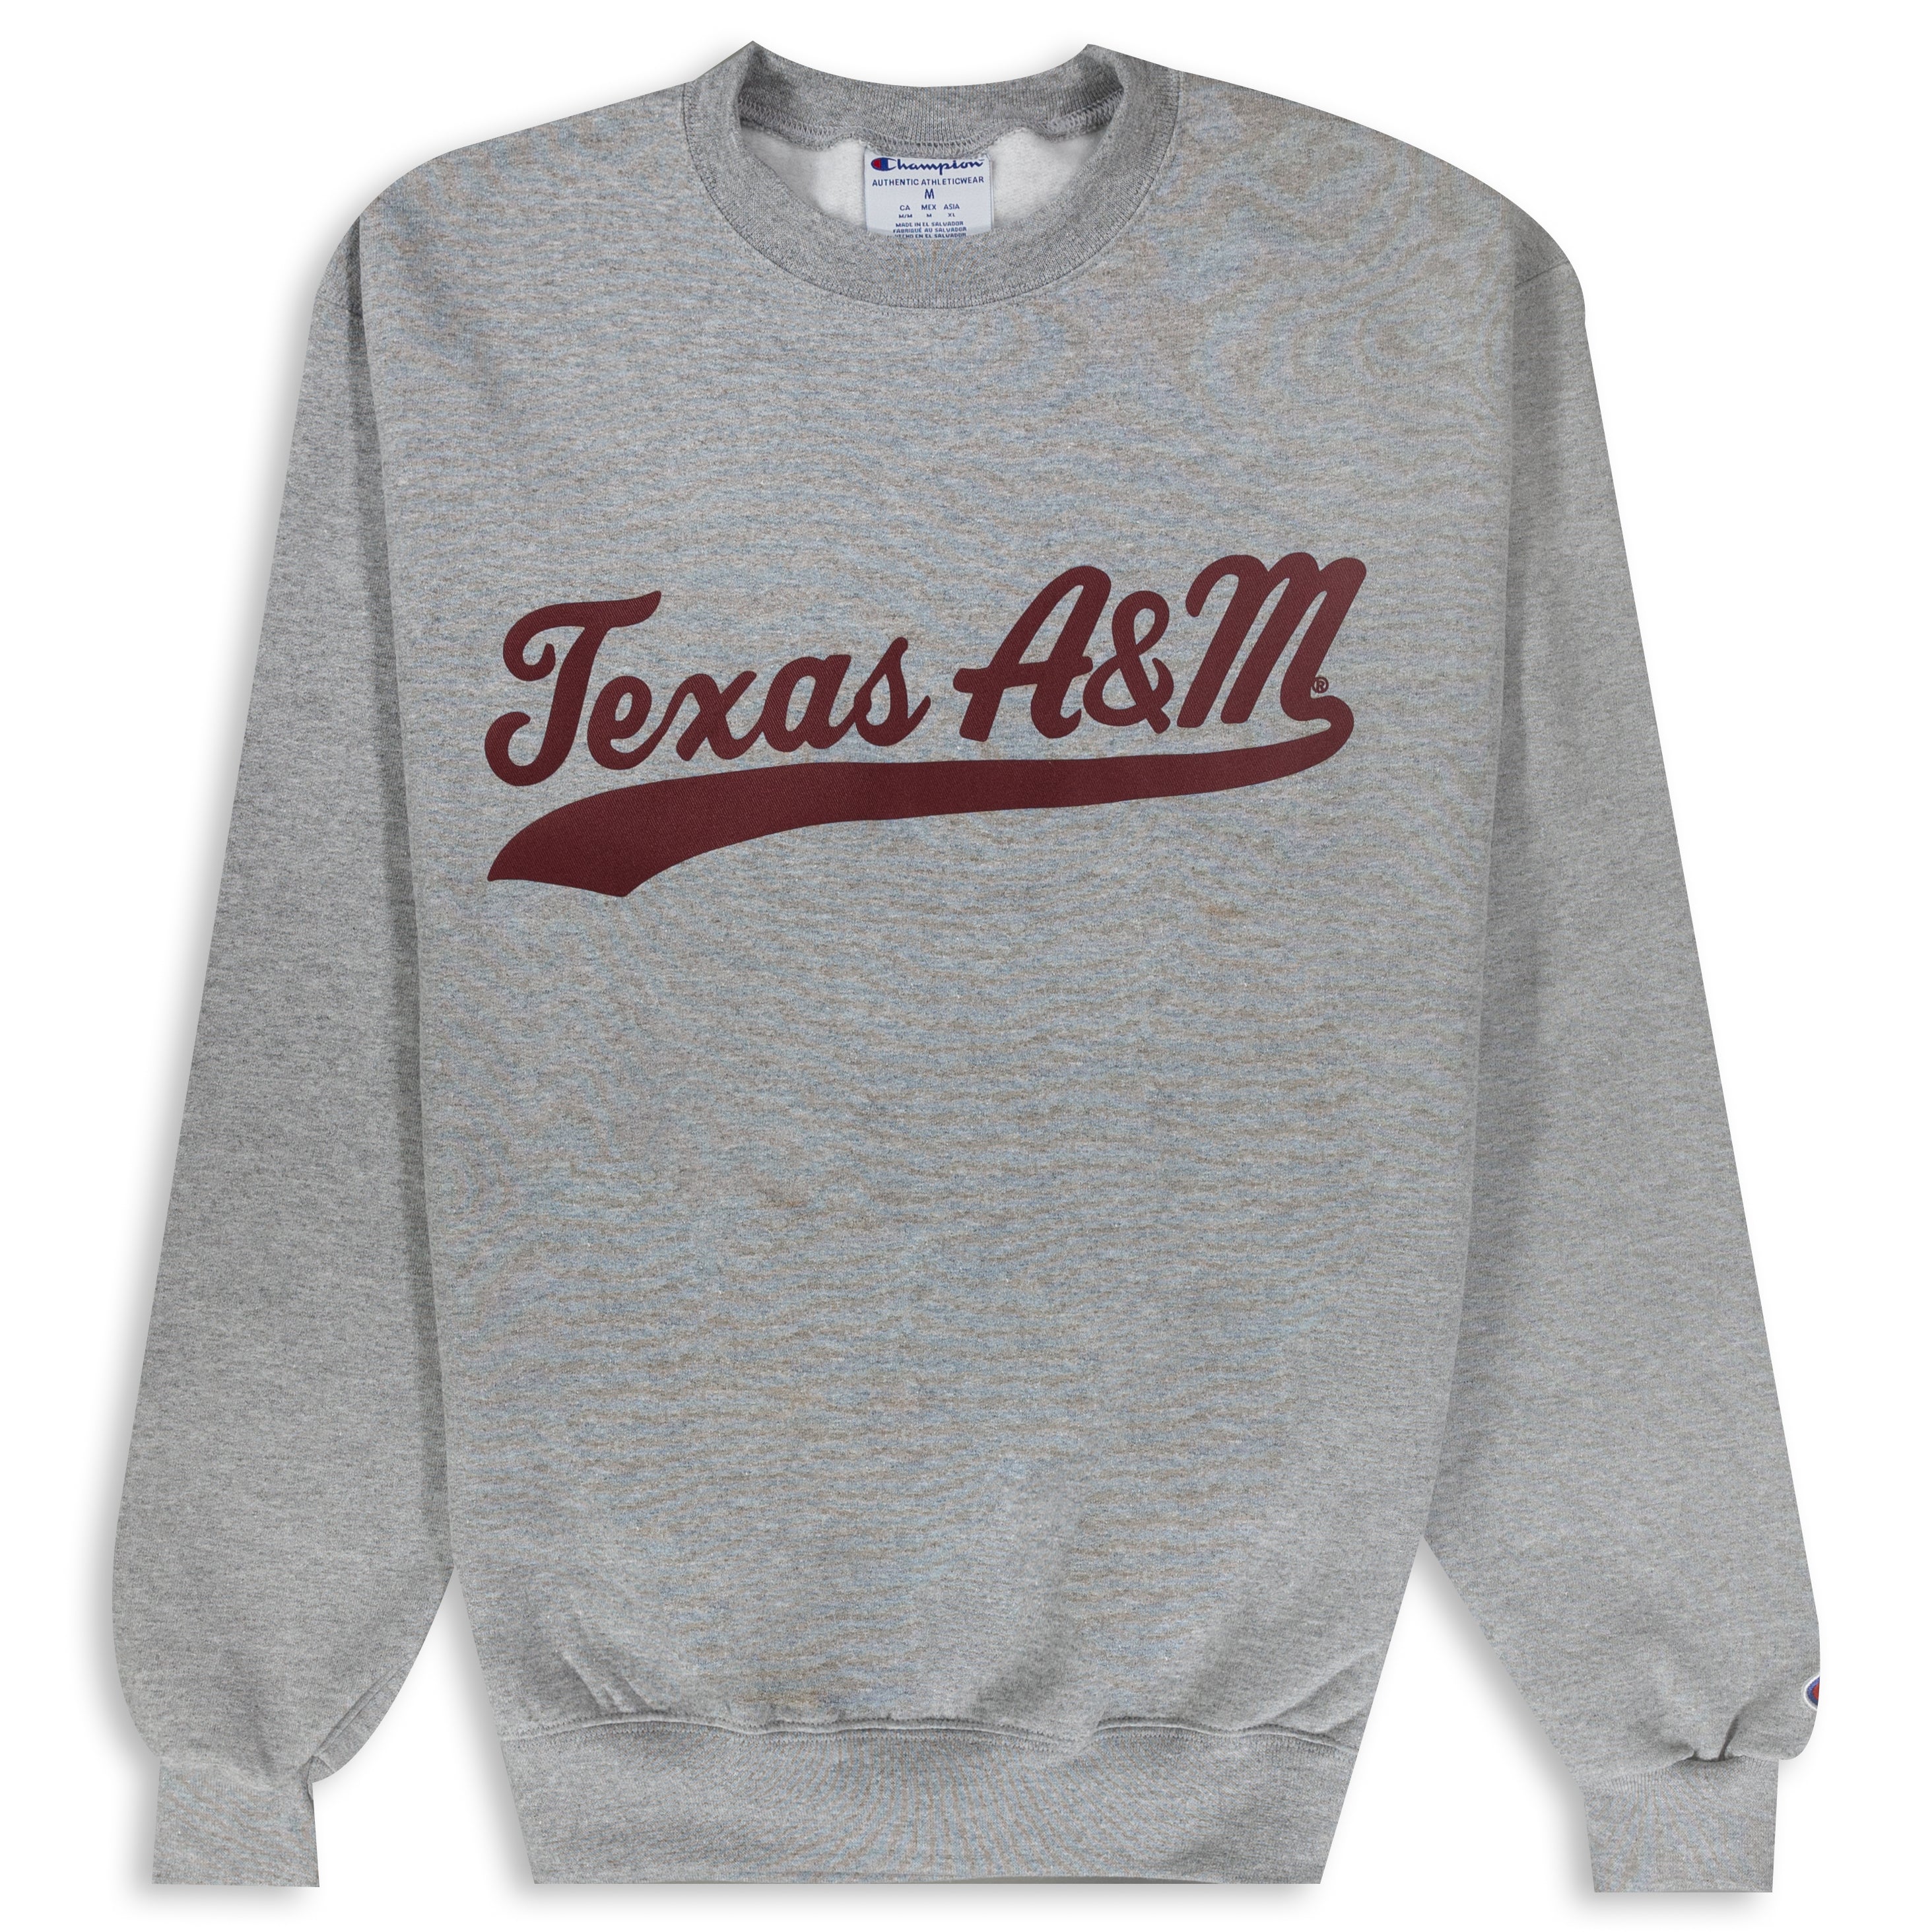 baketball Team' Letters Print Trendy Sweatshirt, Men's Casual